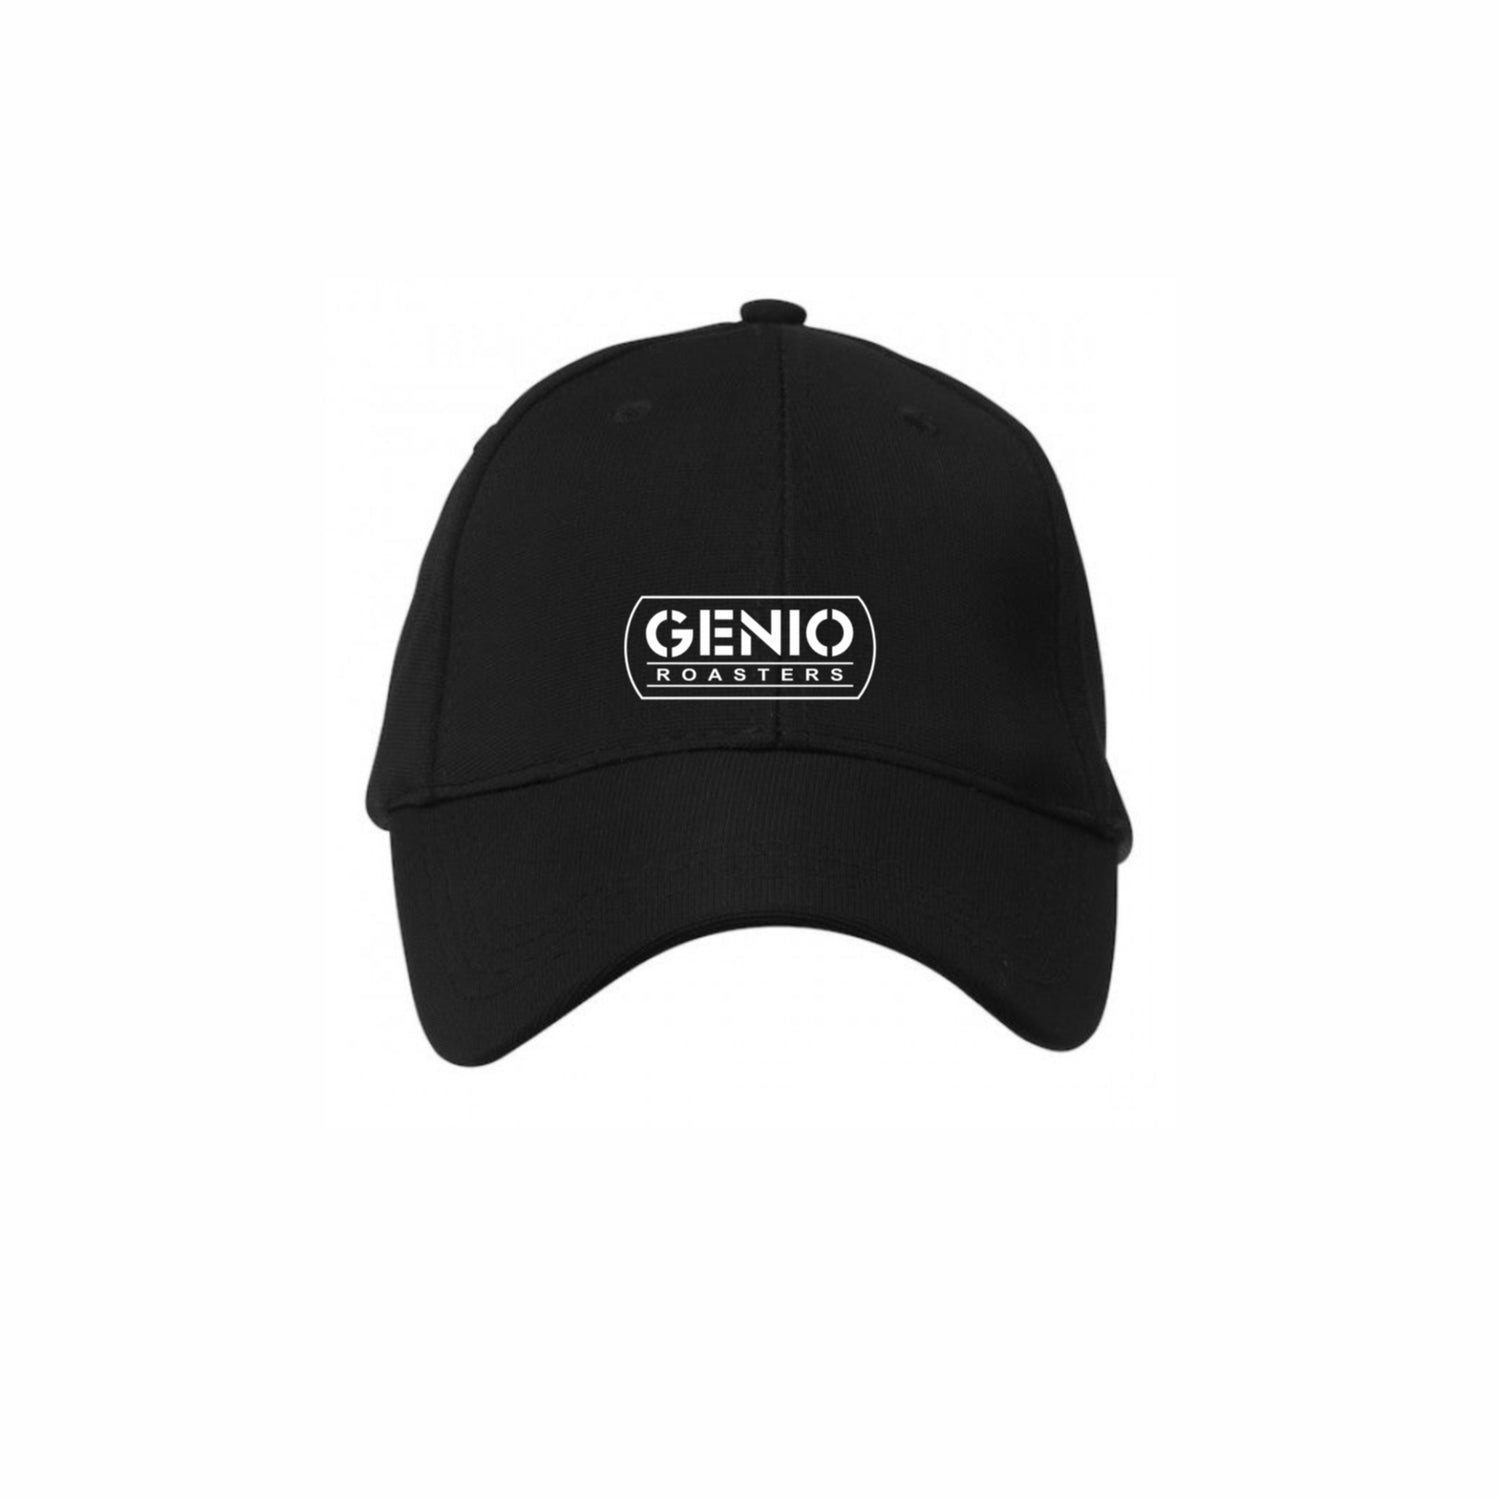 Genio Roasters Merchandise Cap 